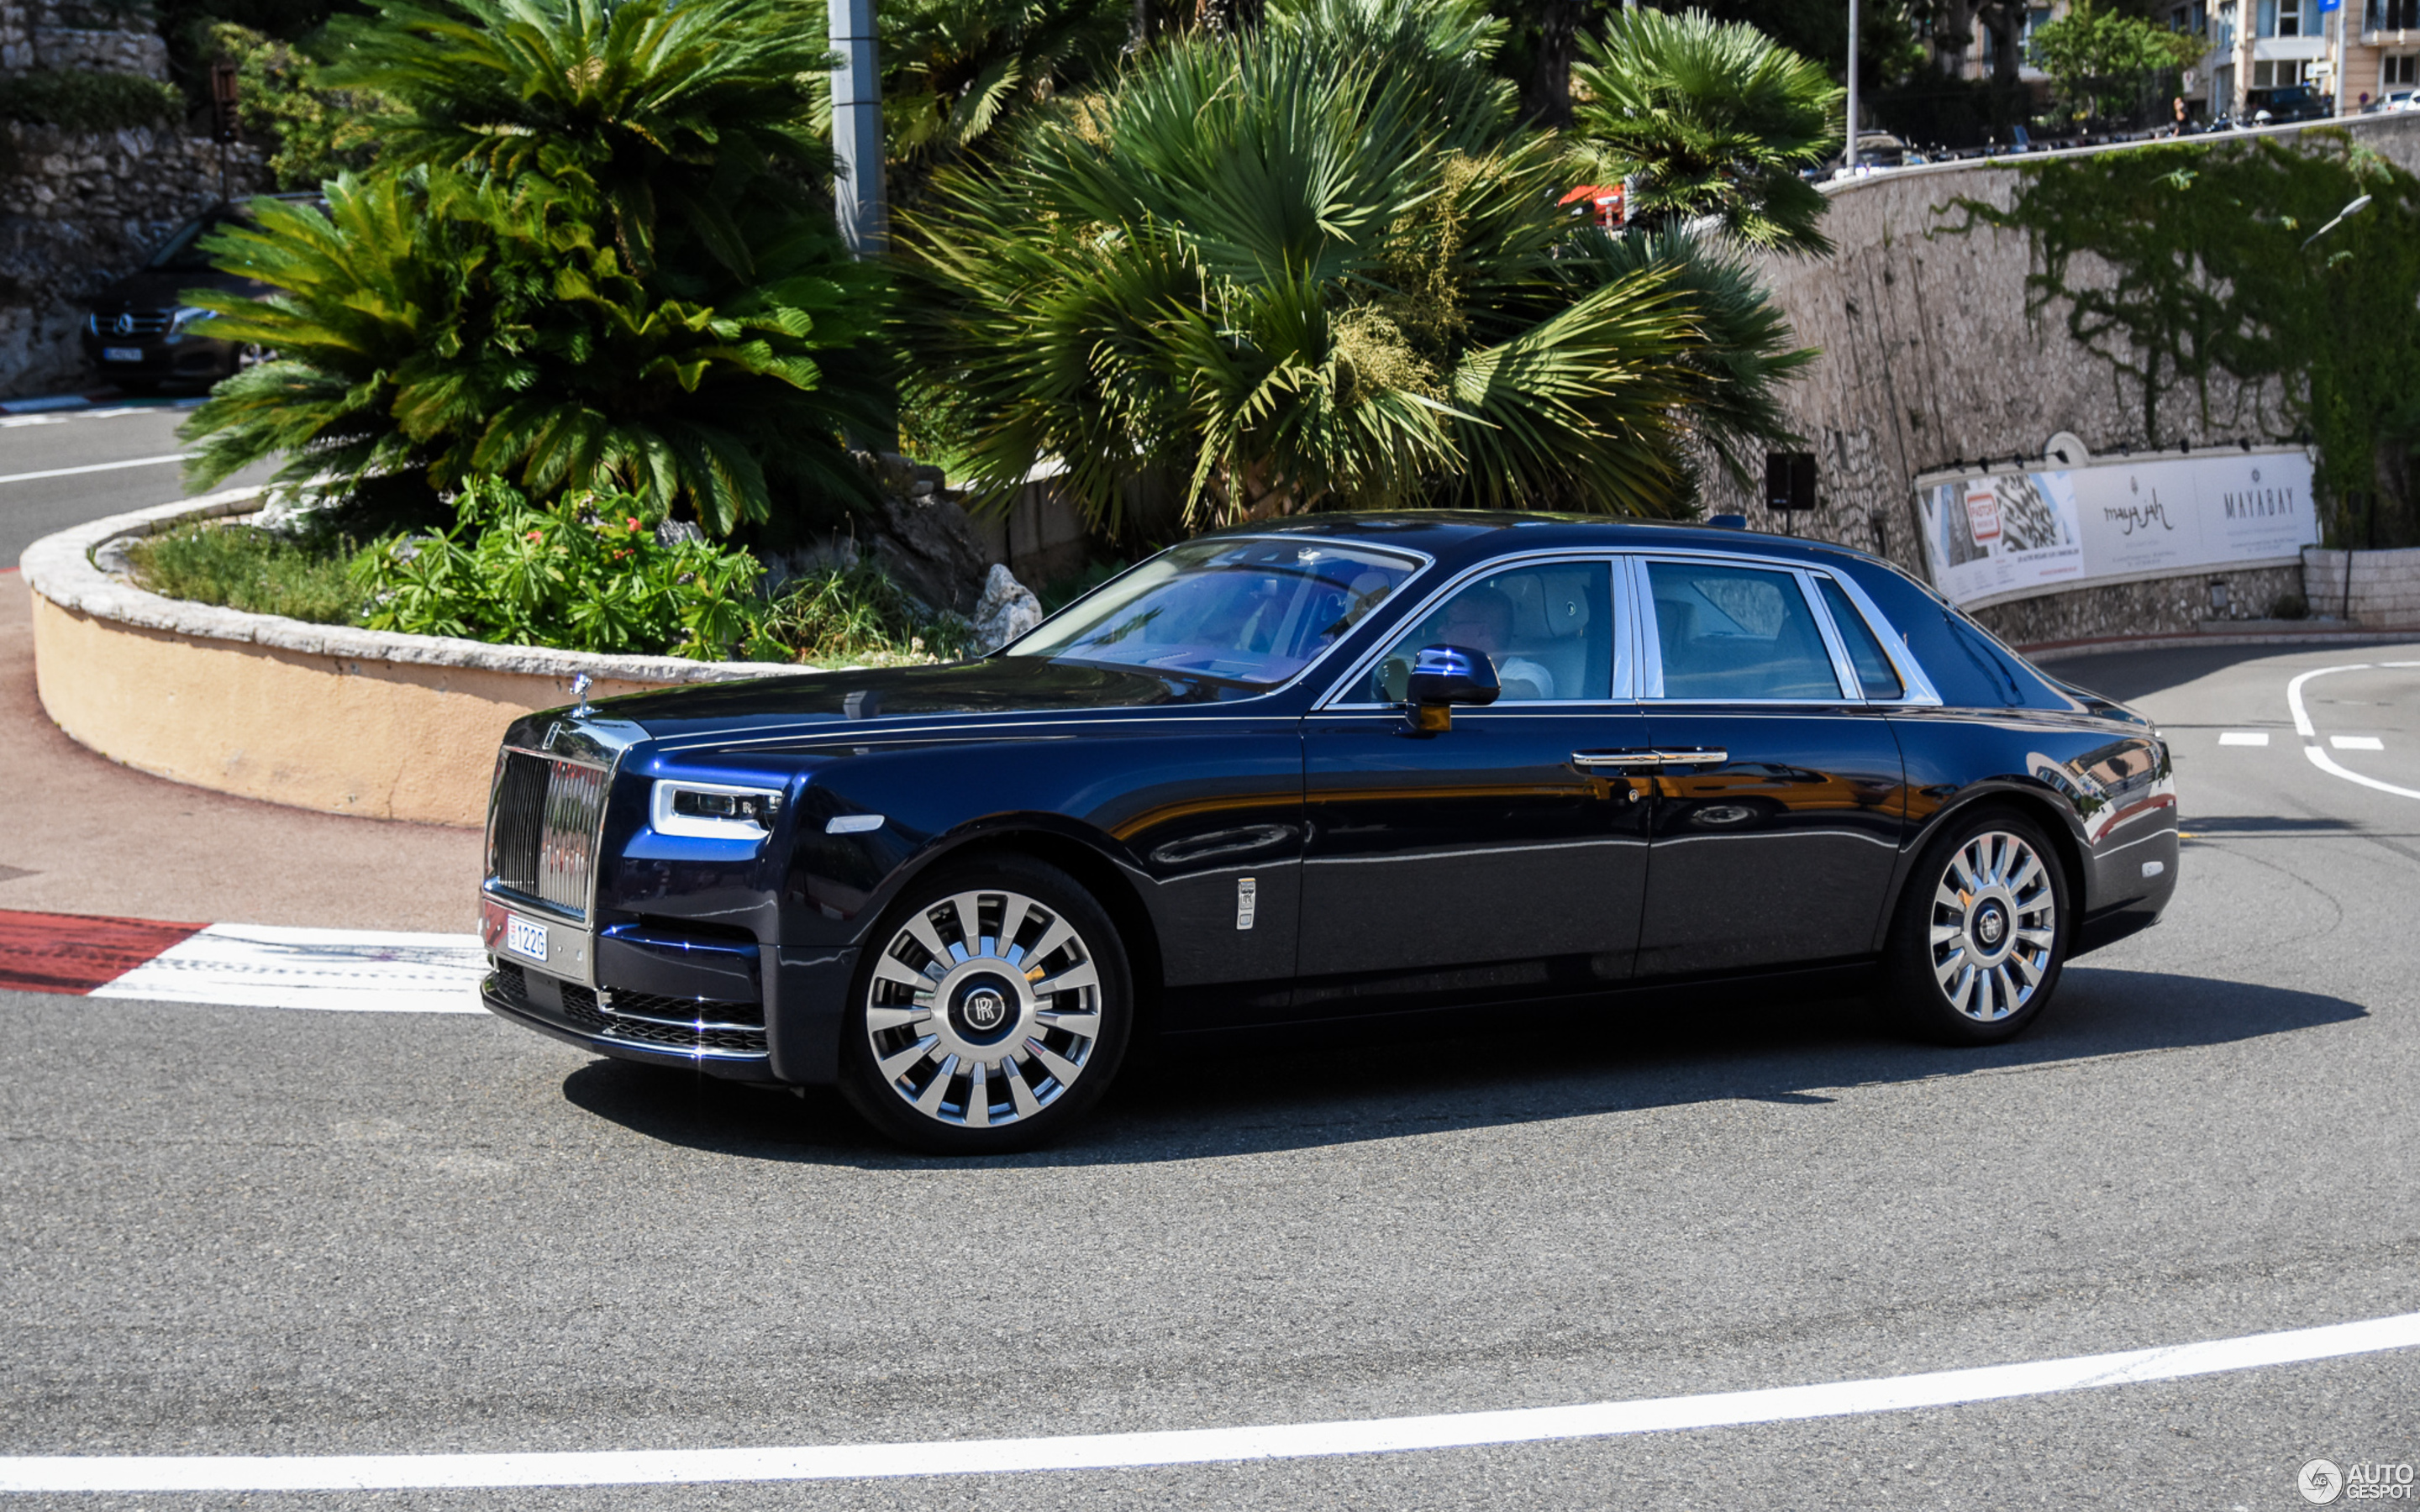 General 2880x1800 car Rolls-Royce luxury cars British cars side view road pants watermarked logo vehicle Monaco